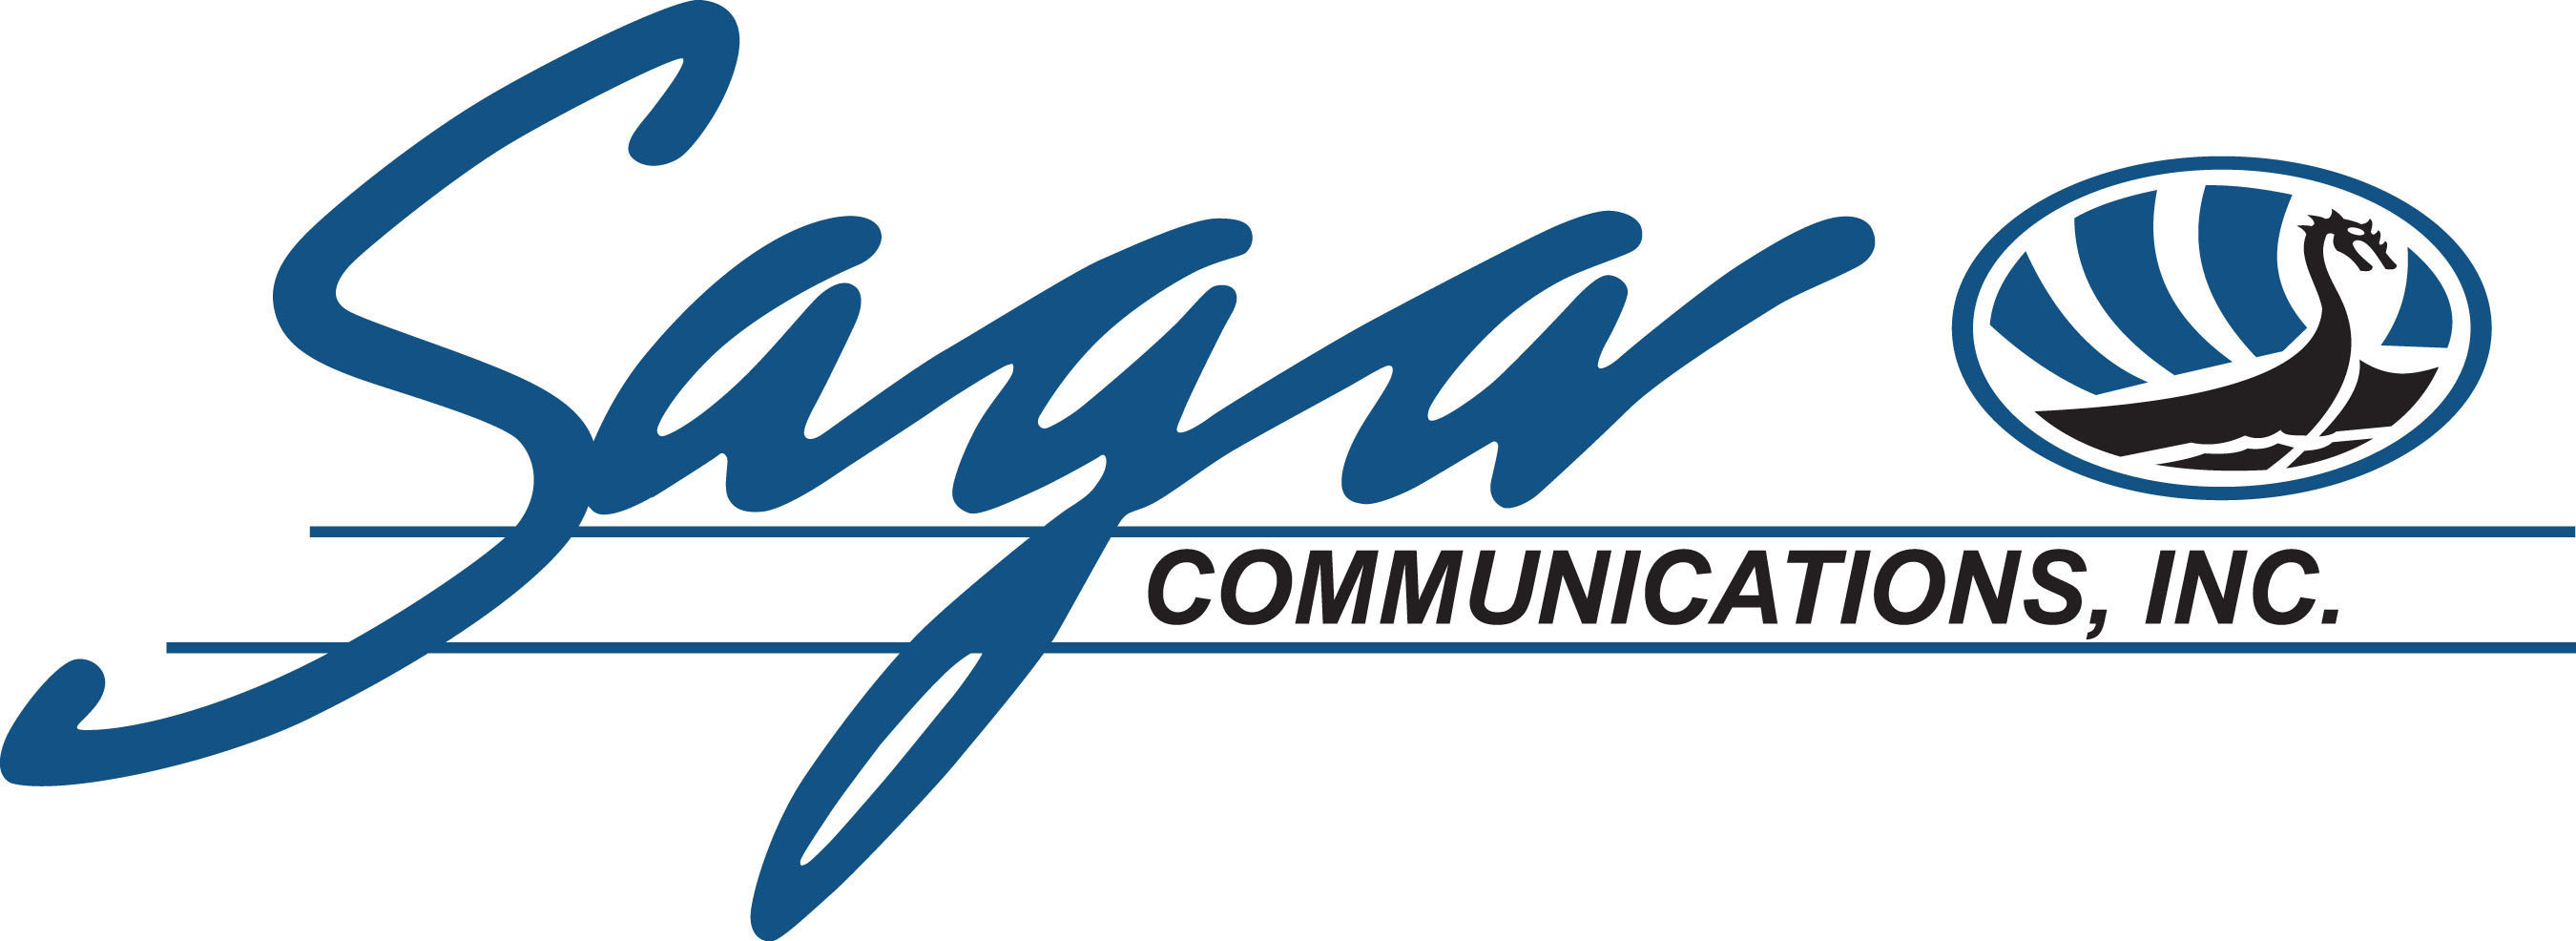 Saga Communications, Inc. logo.